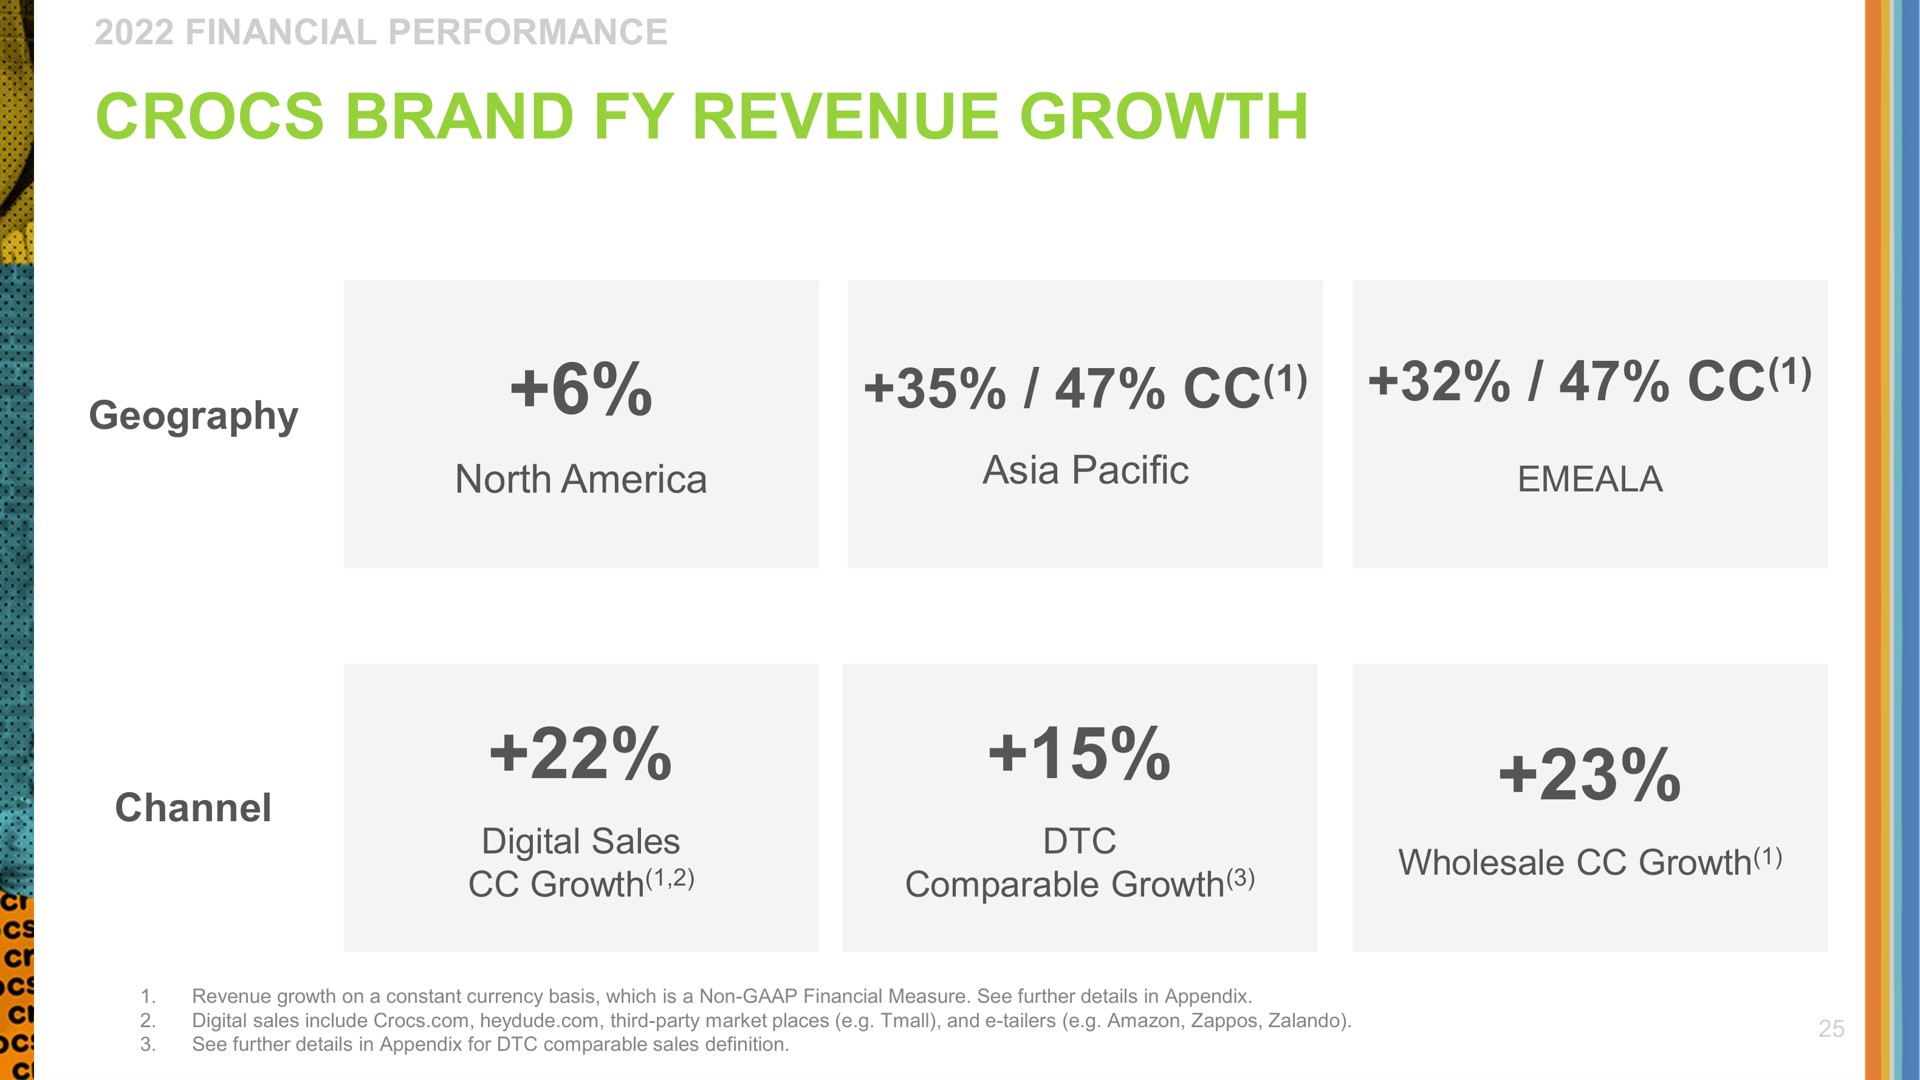 brand revenue growth | Crocs